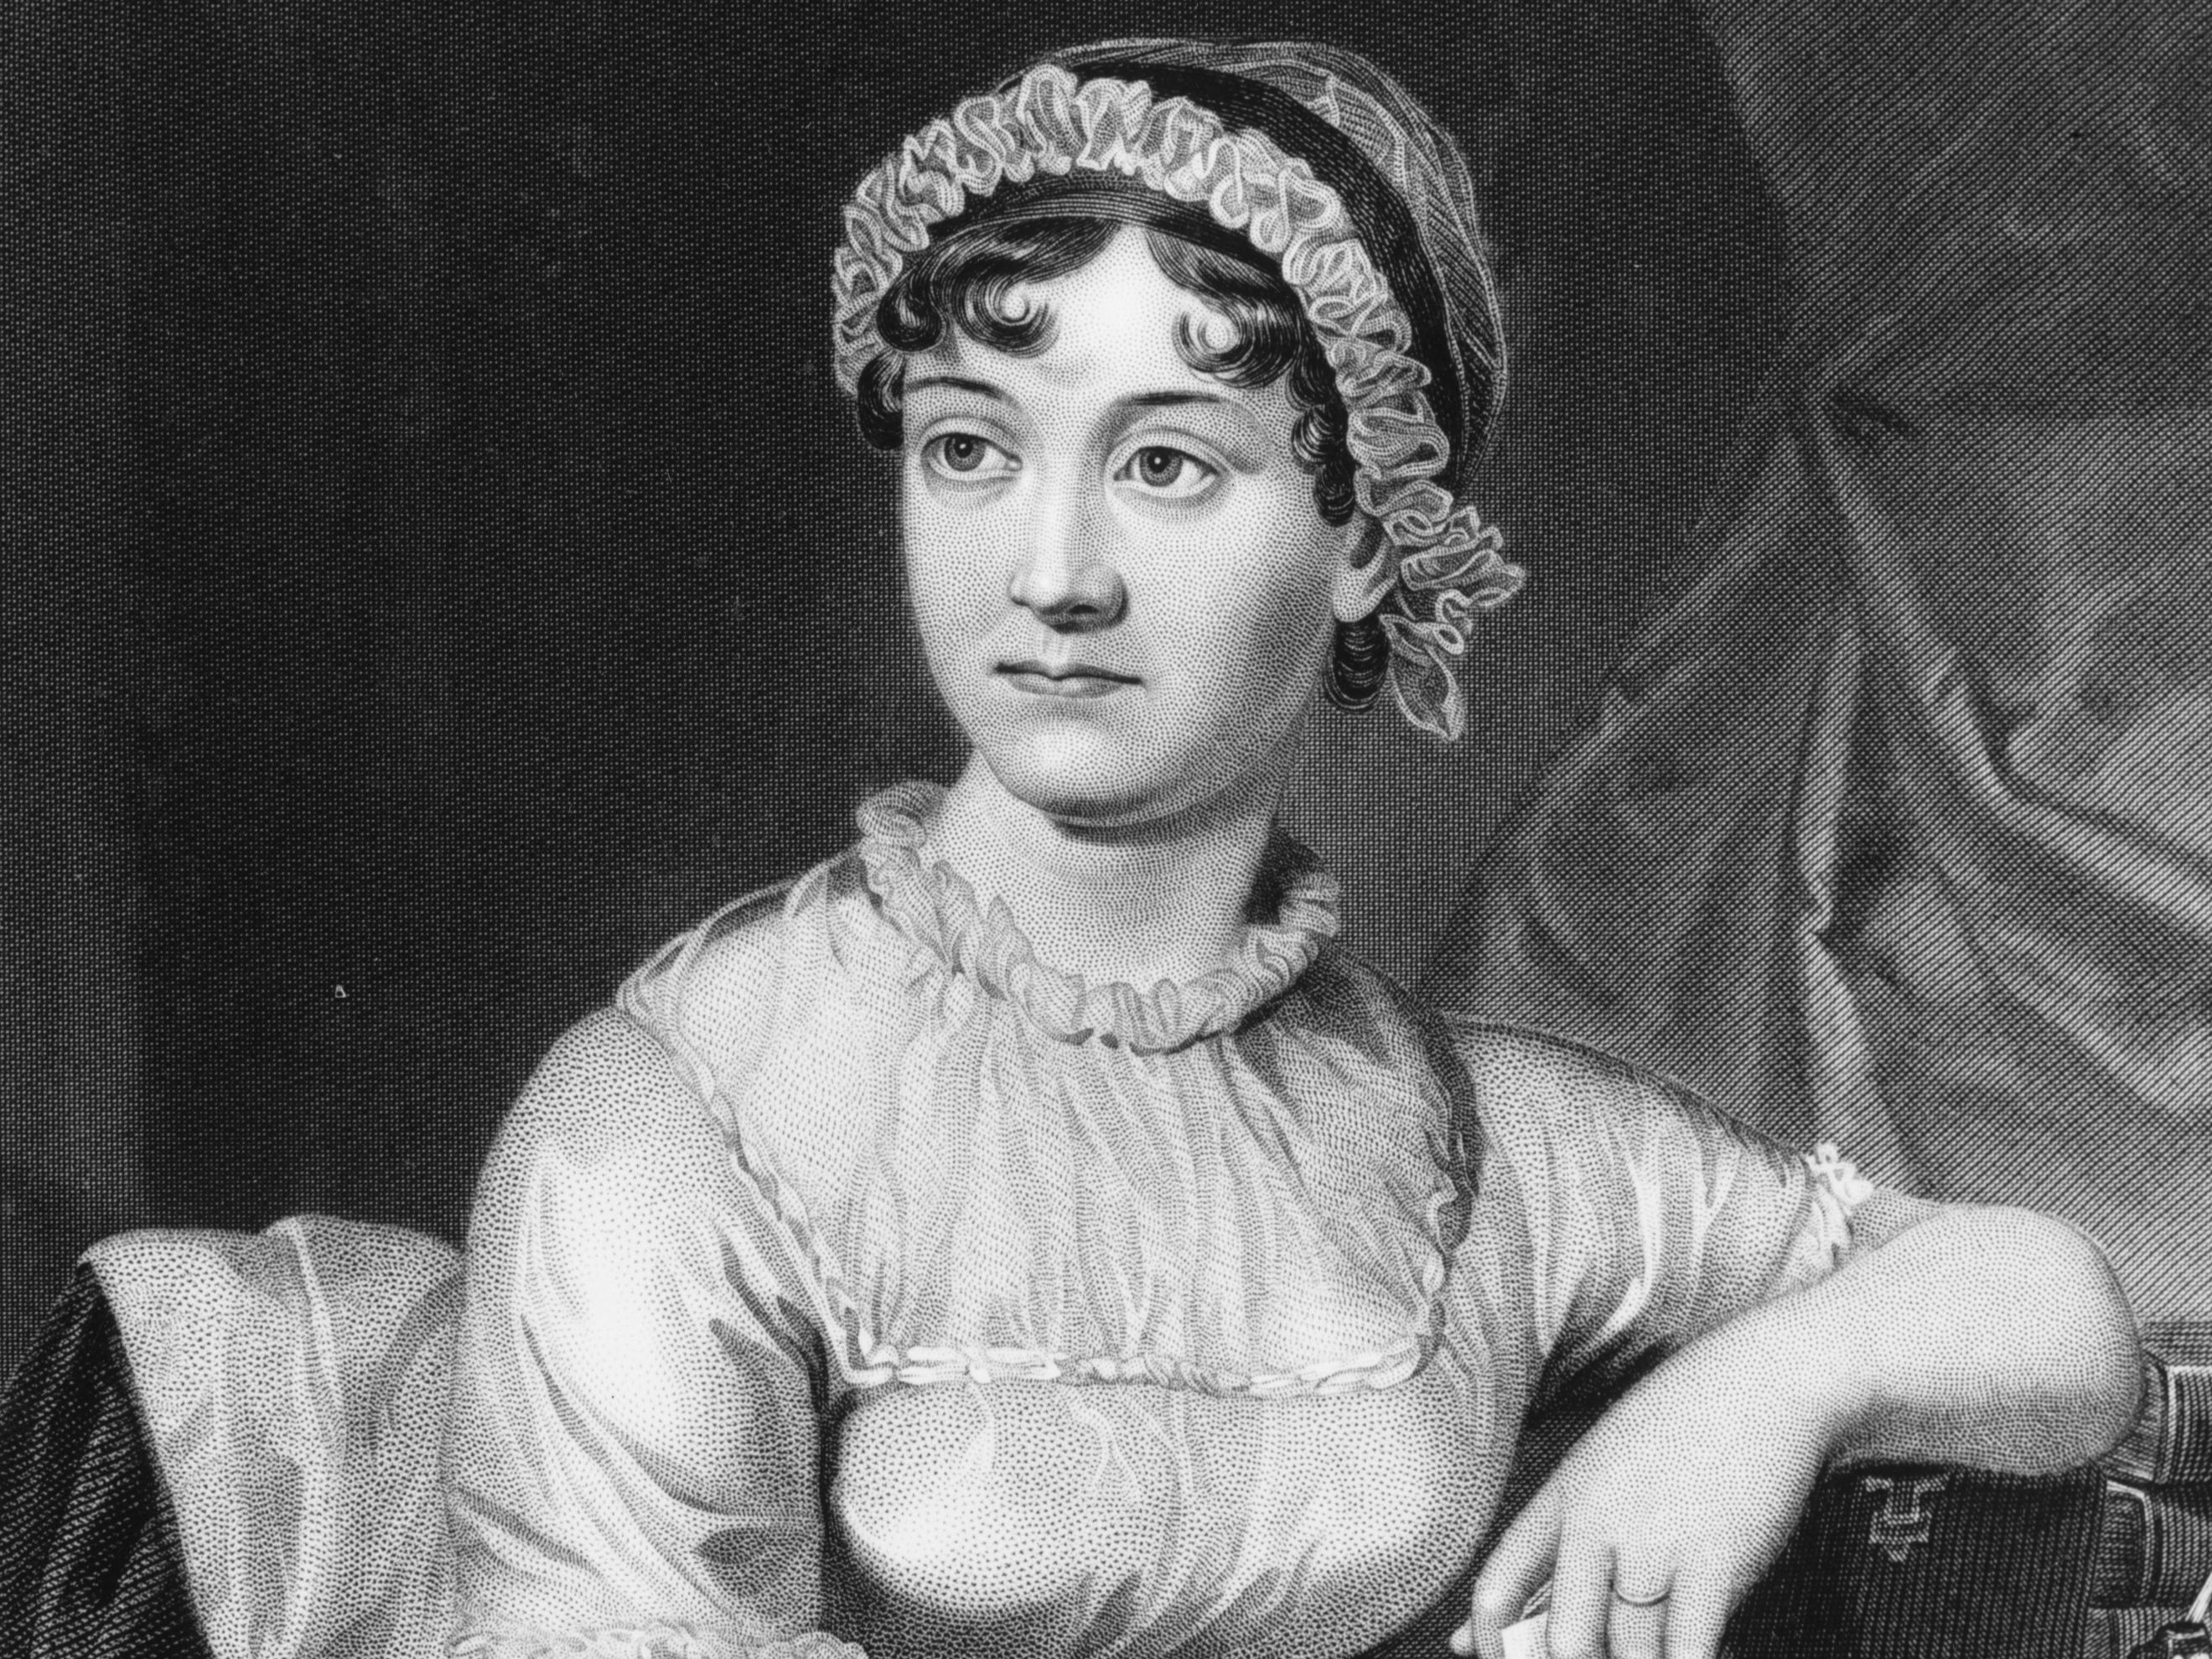 Ben John was ordered to read classics including Jane Austen’s Pride and Prejudice